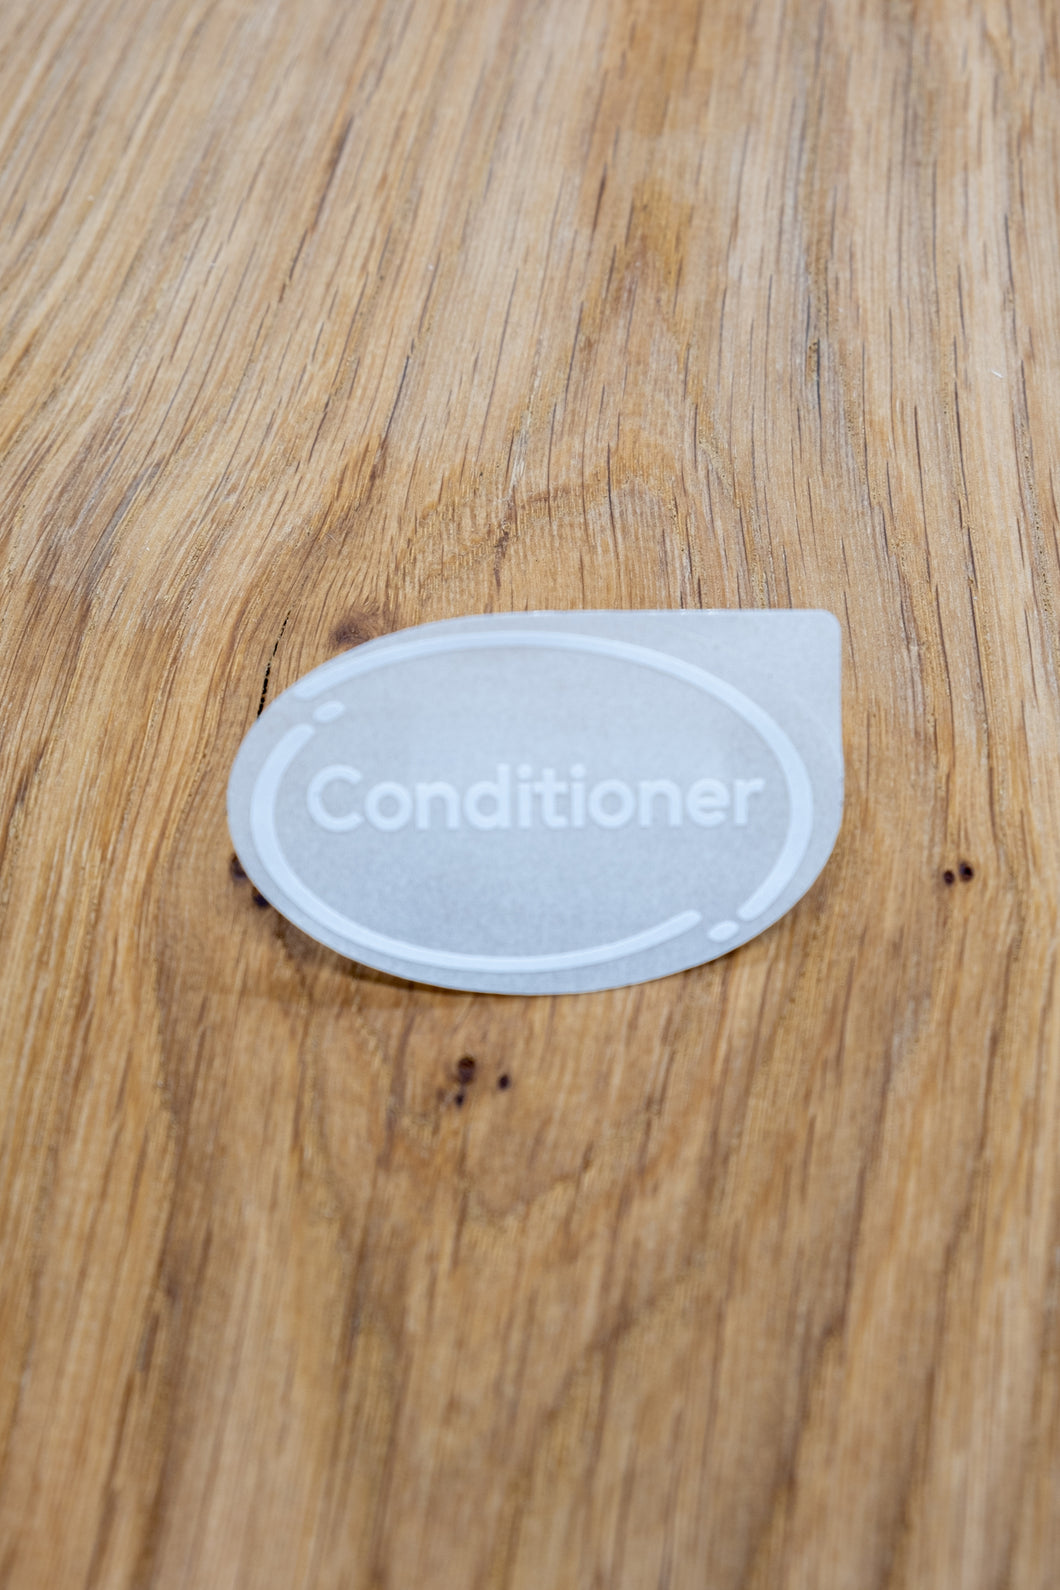 Hair Conditioner Label